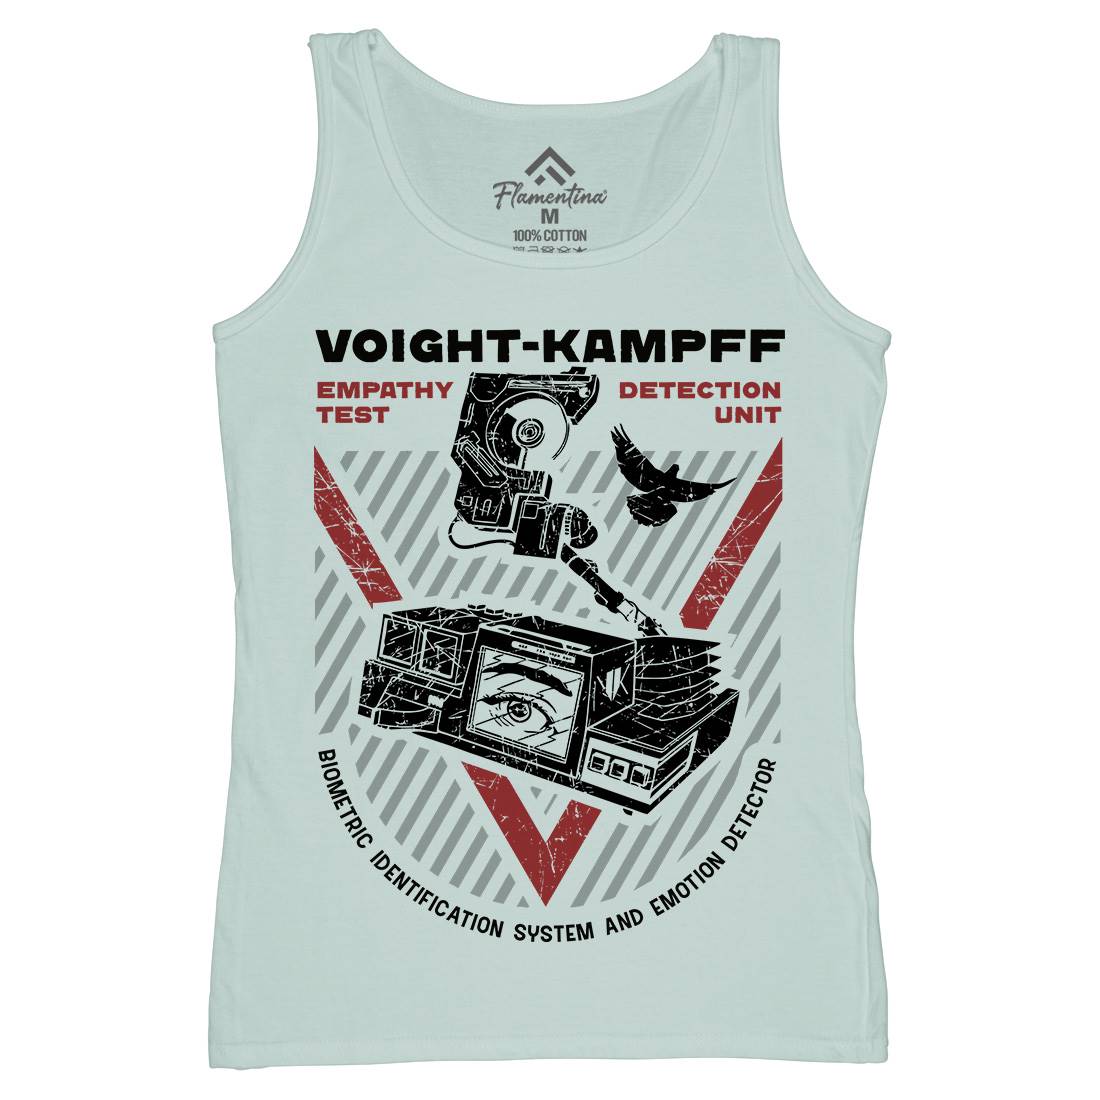 Voight Kampff Womens Organic Tank Top Vest Space D175